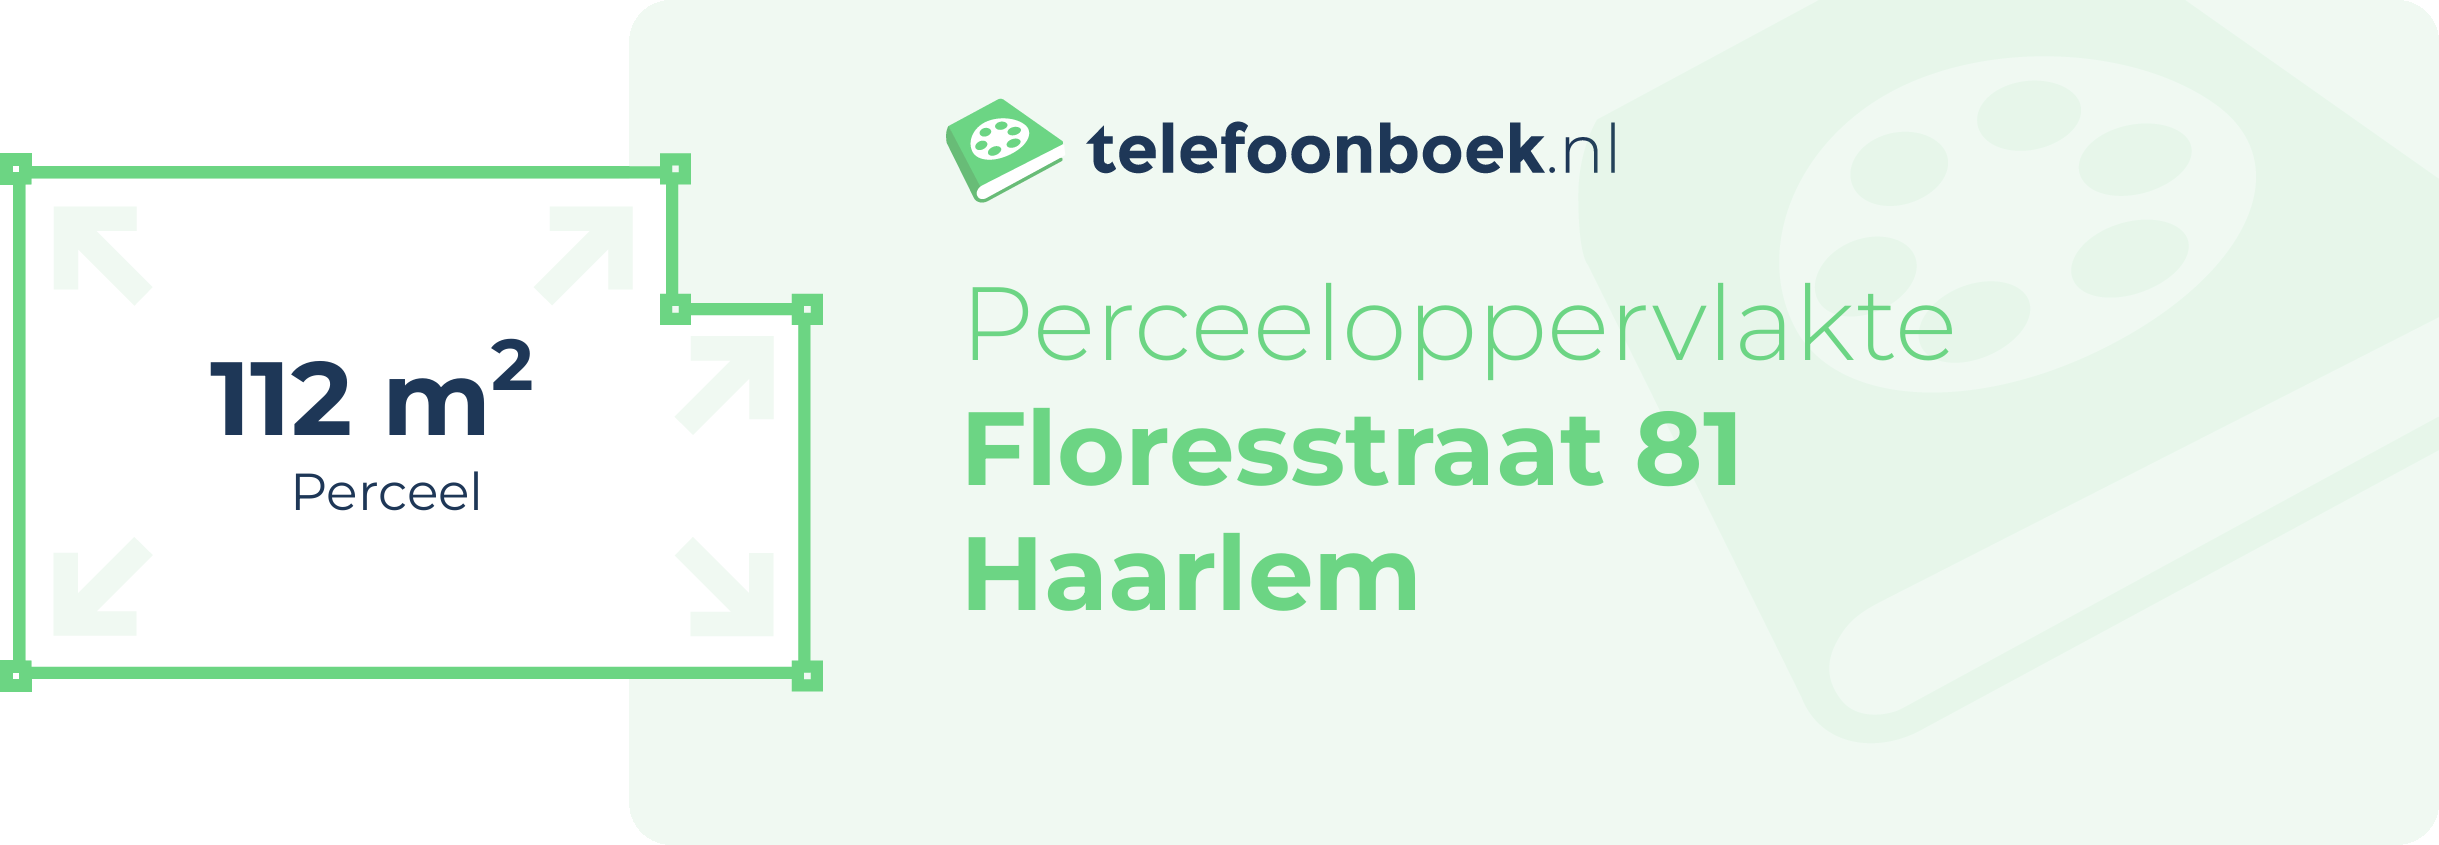 Perceeloppervlakte Floresstraat 81 Haarlem